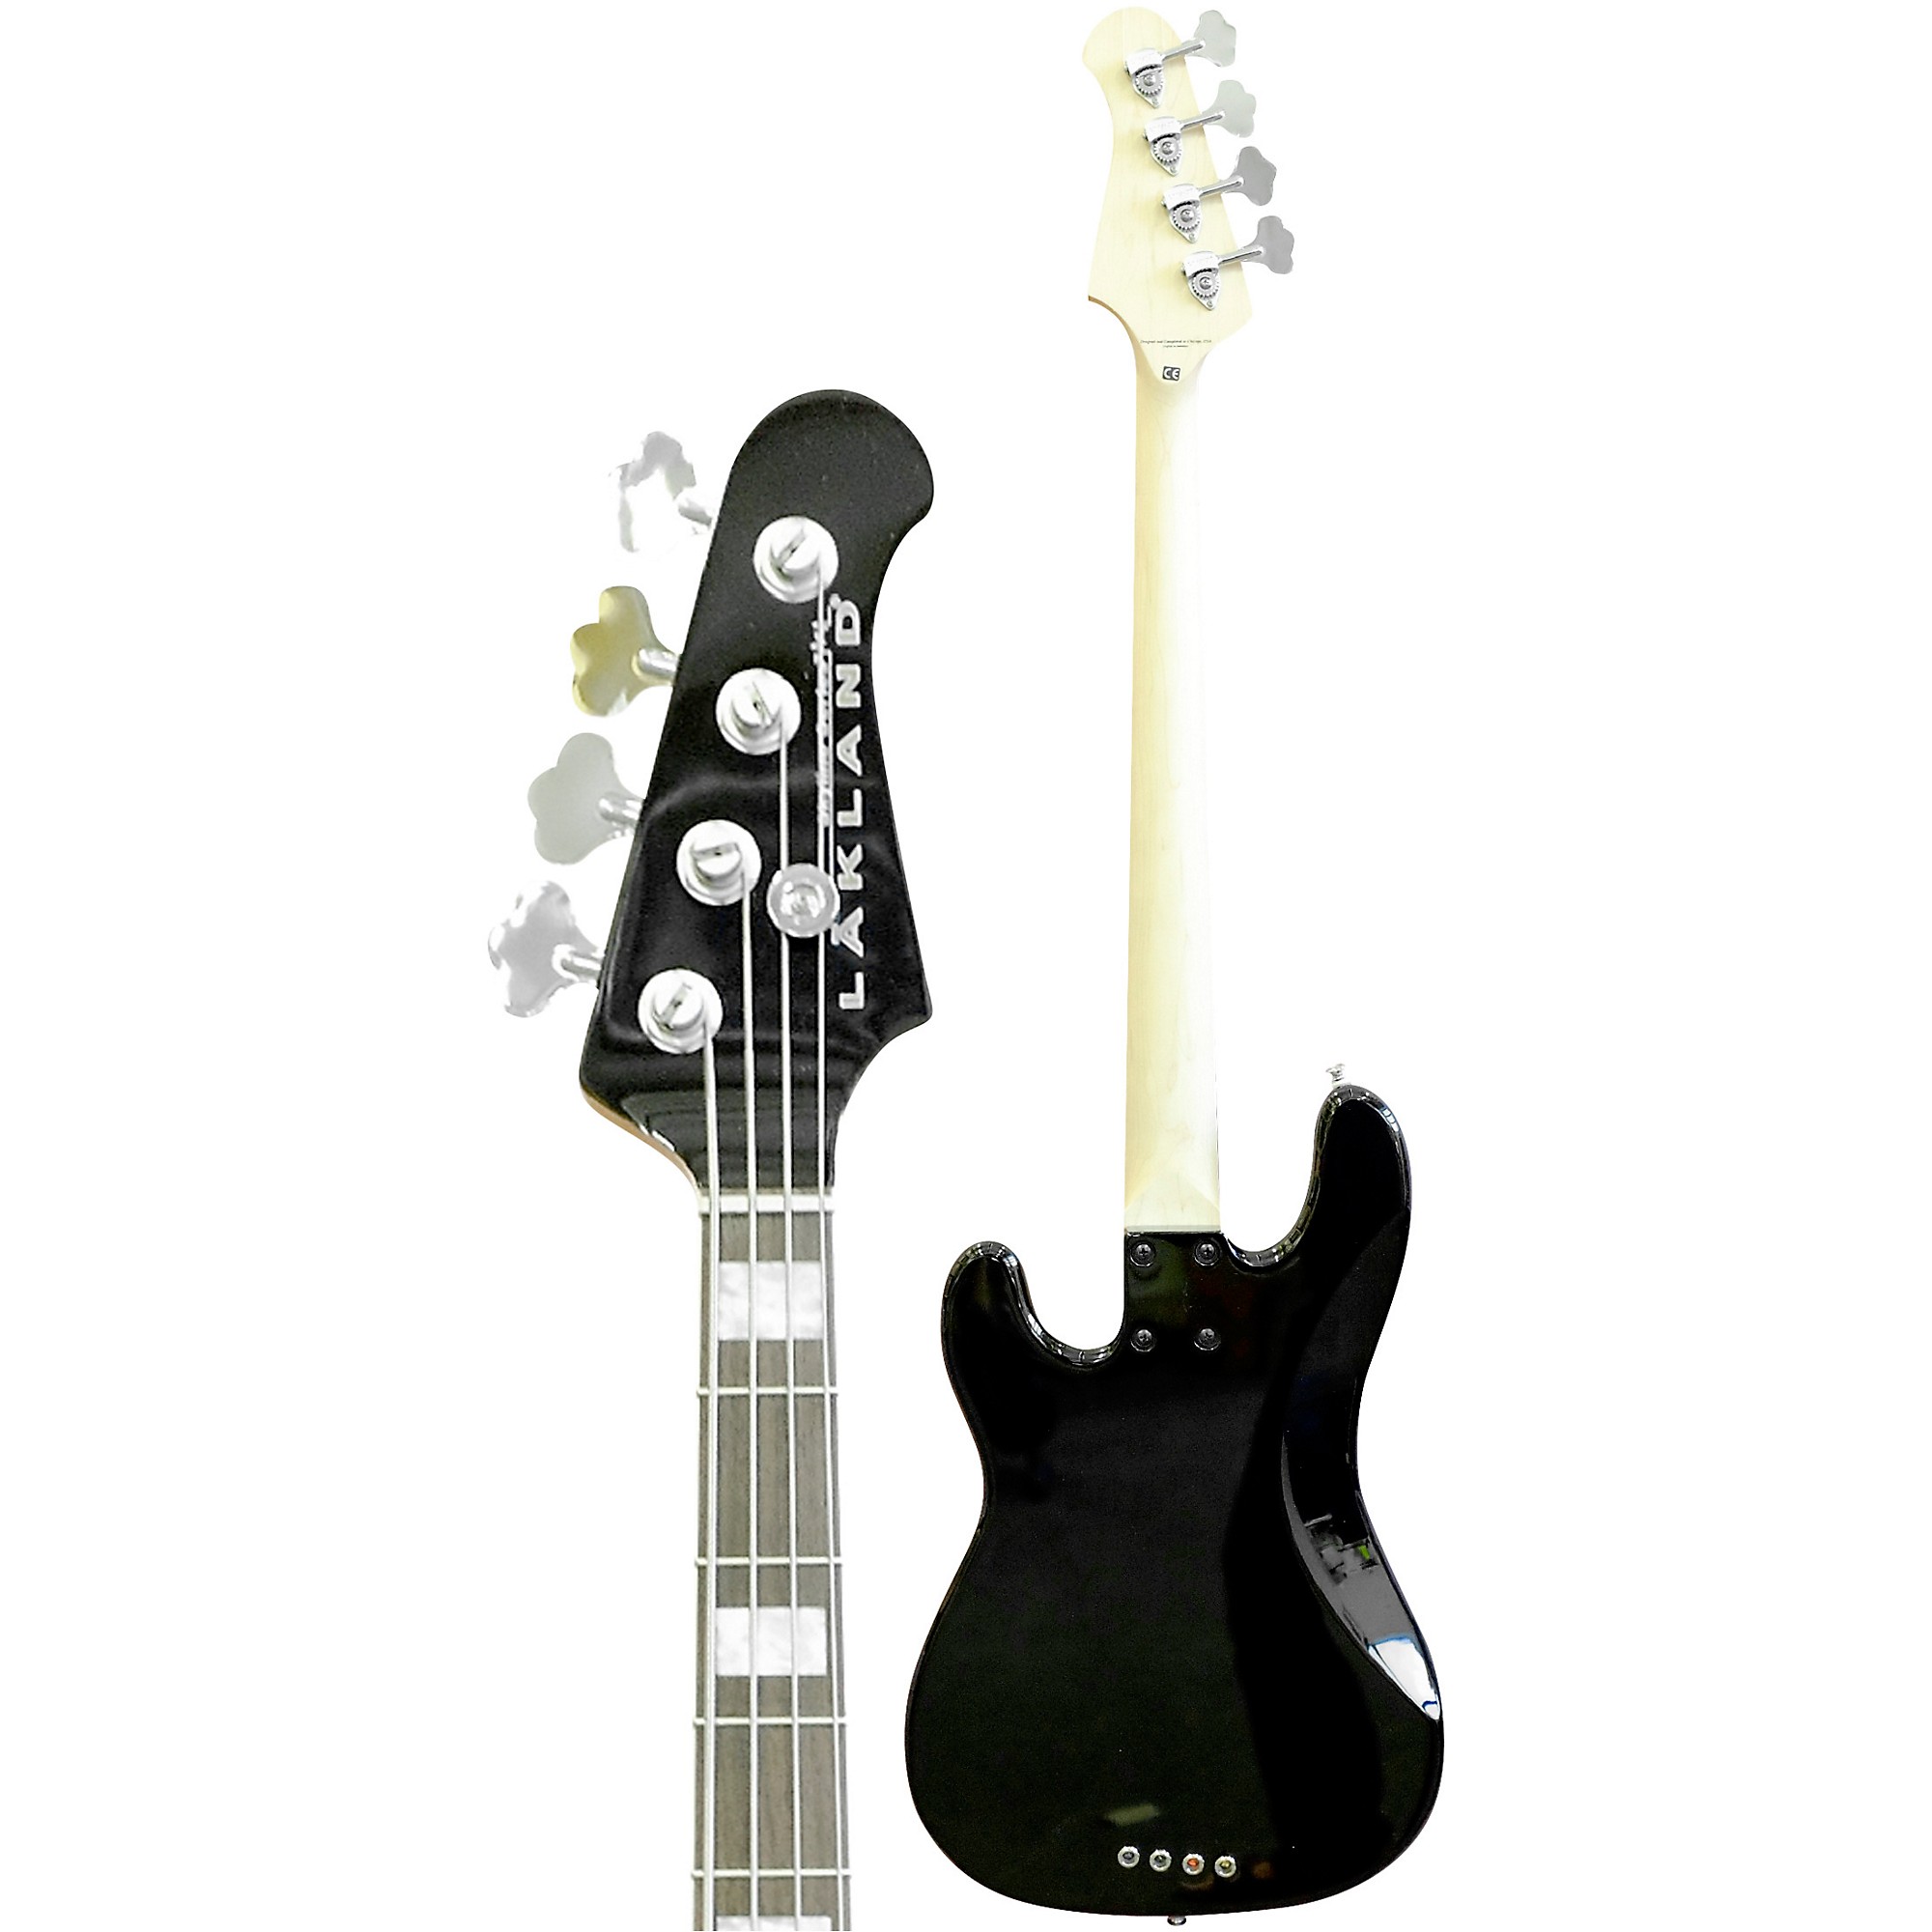 Электробас-гитара Lakland Skyline 44-64 Custom с накладкой из палисандра, черная цена и фото